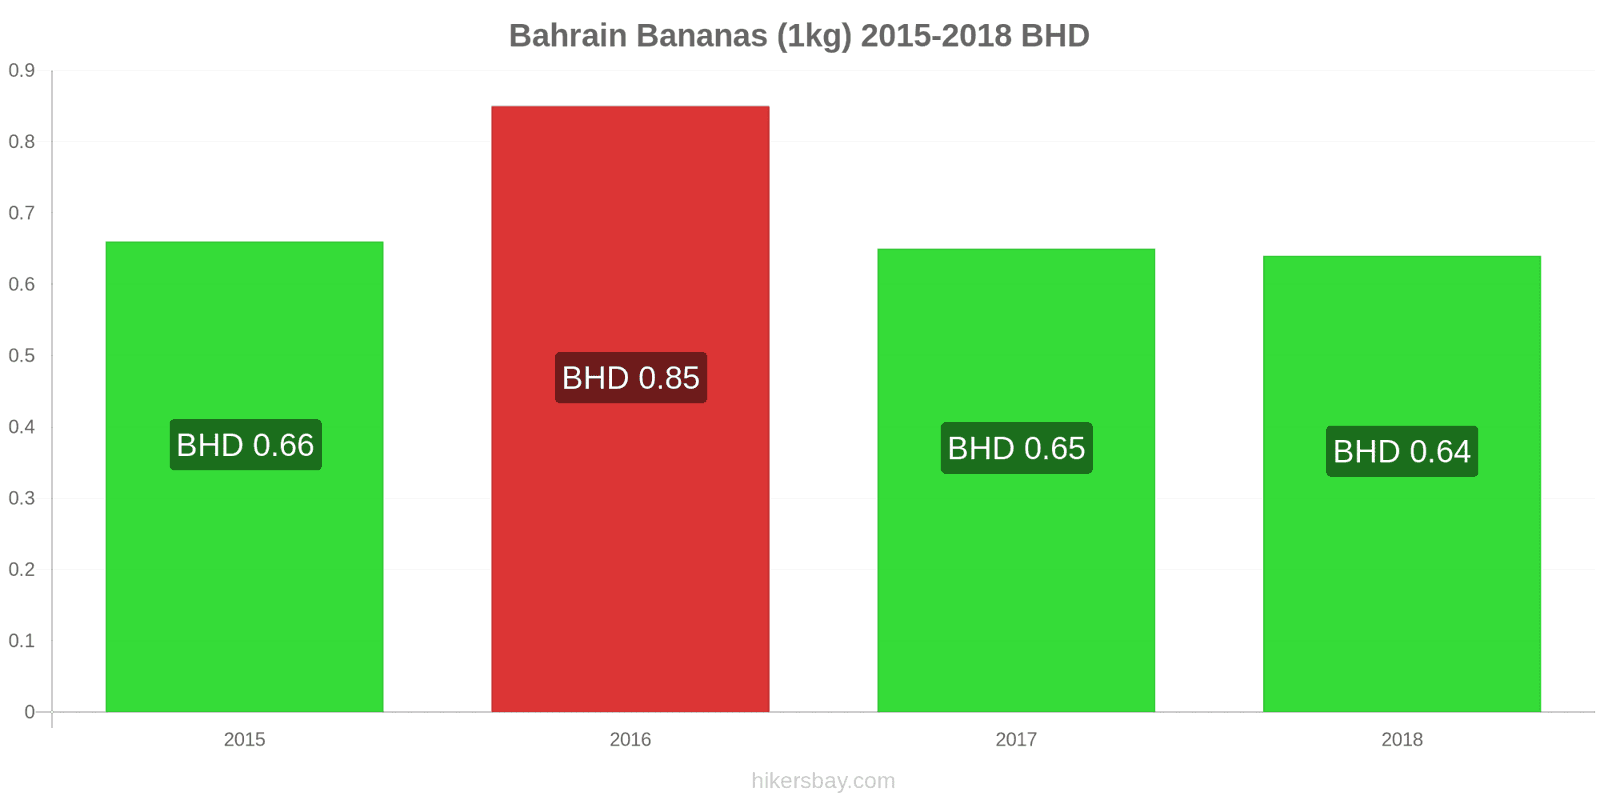 Bahrain price changes Bananas (1kg) hikersbay.com